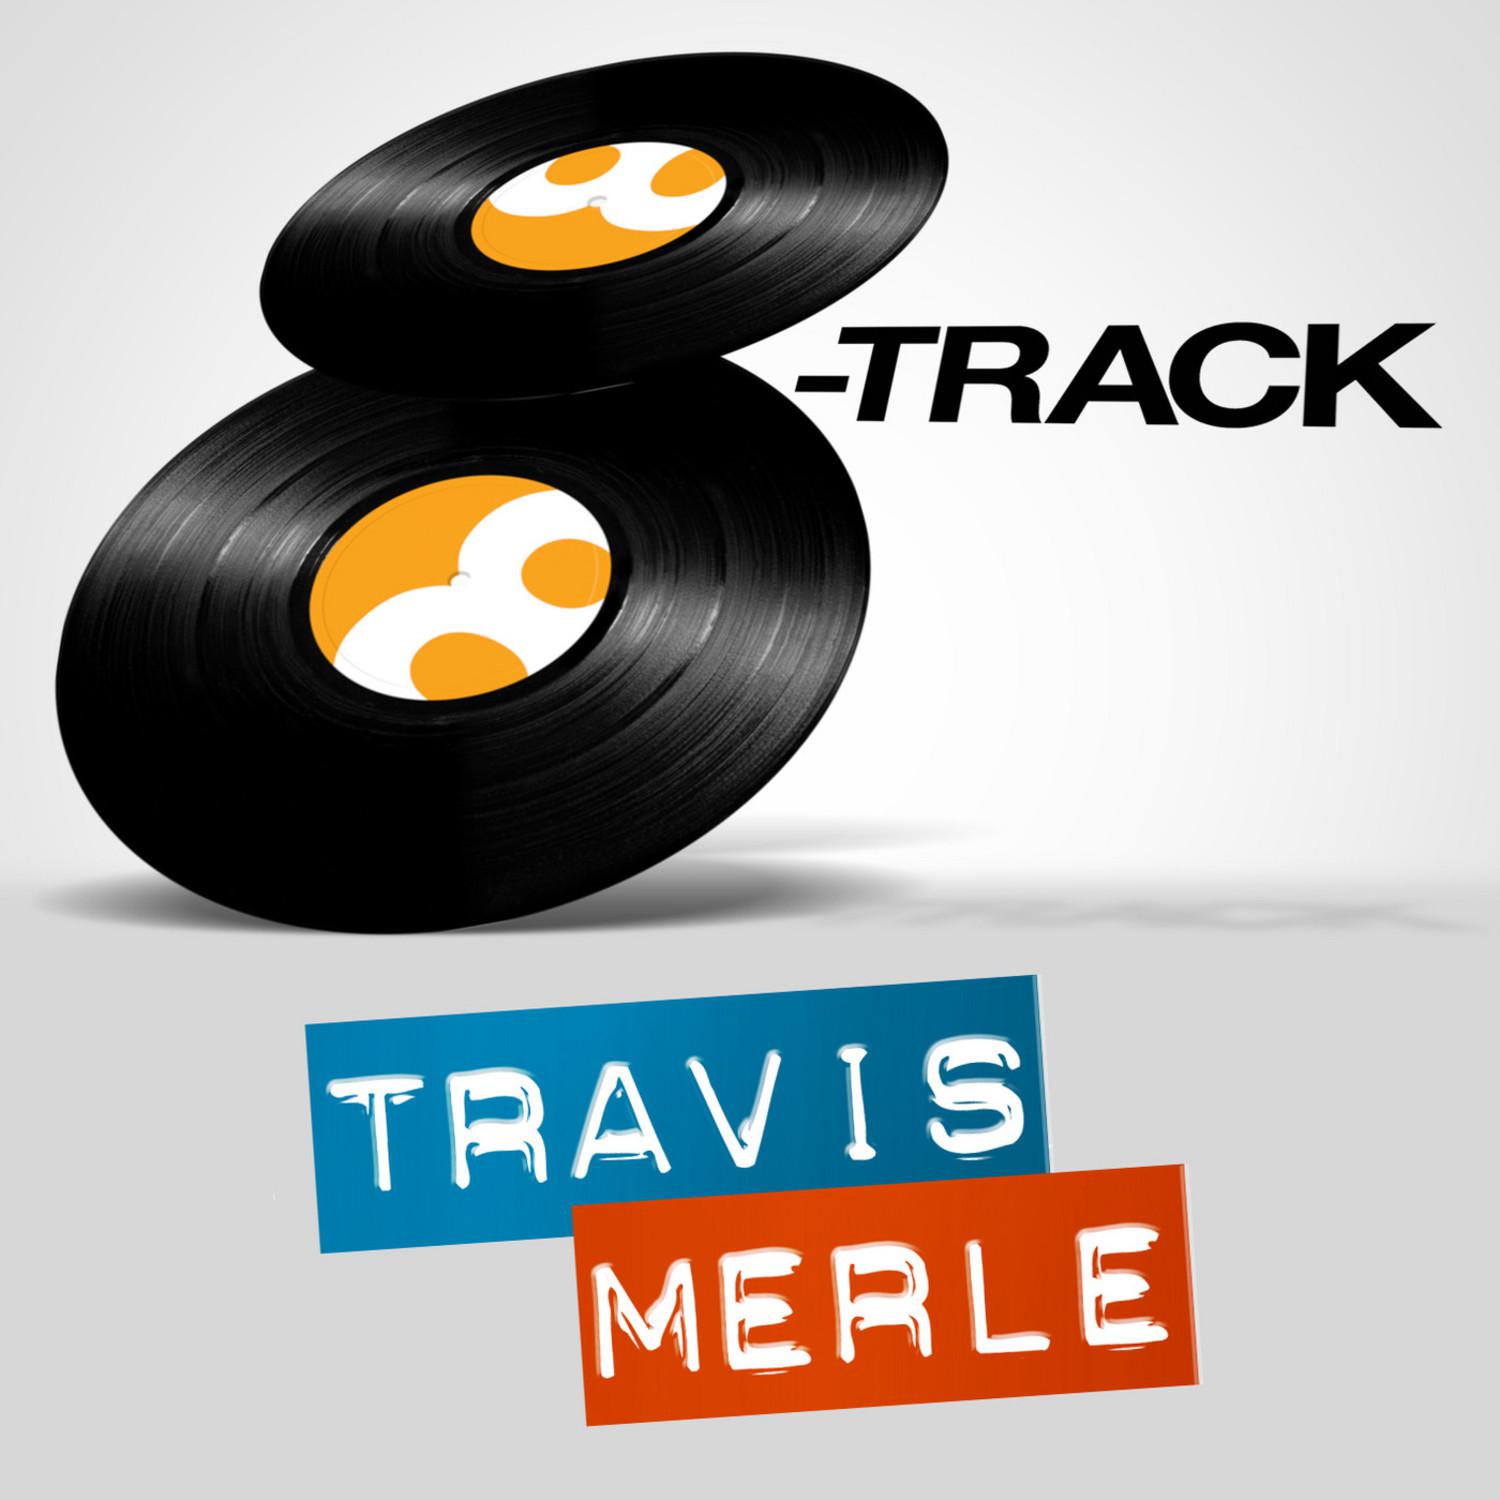 8-Track: Merle Travis